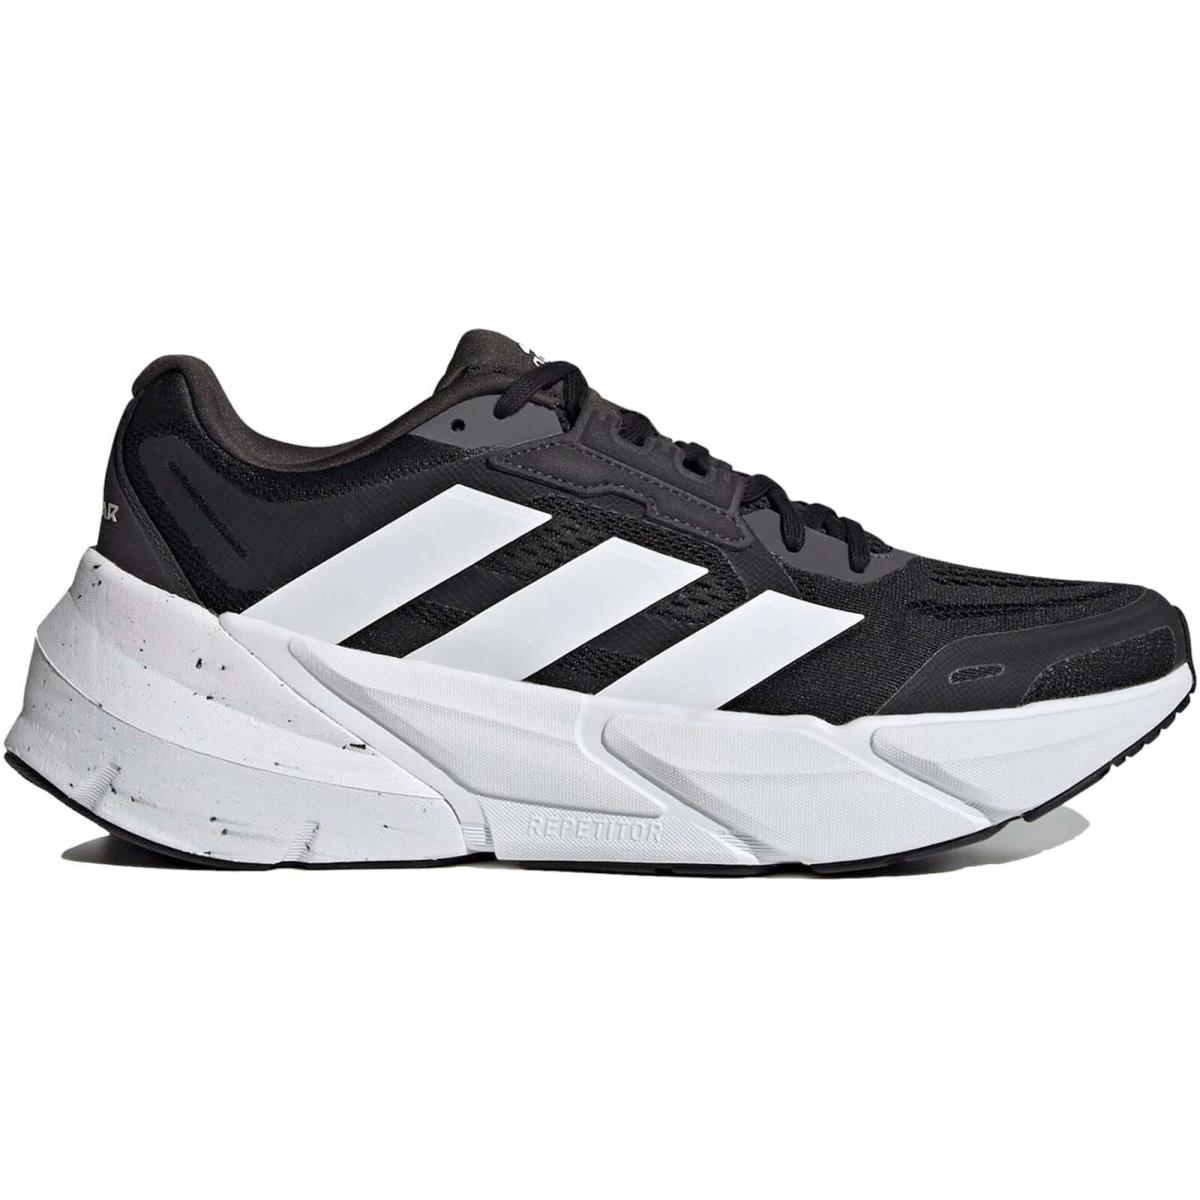 Adidas Adistar CS Men Size 13.0 Running Shoes Cloud White Comfortable